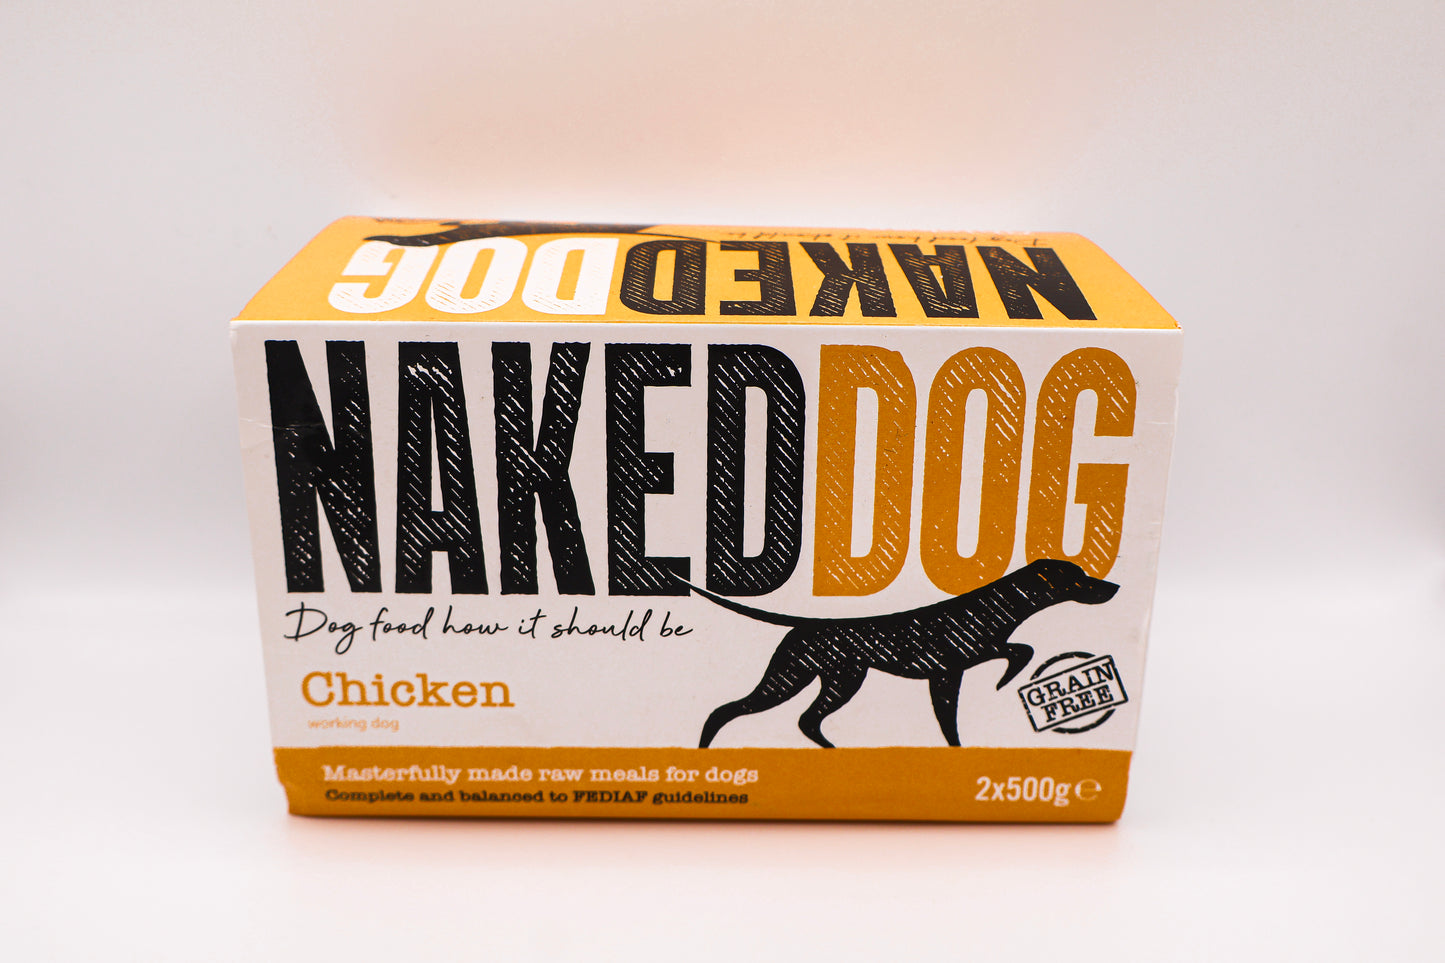 Naked Dog Original Chicken